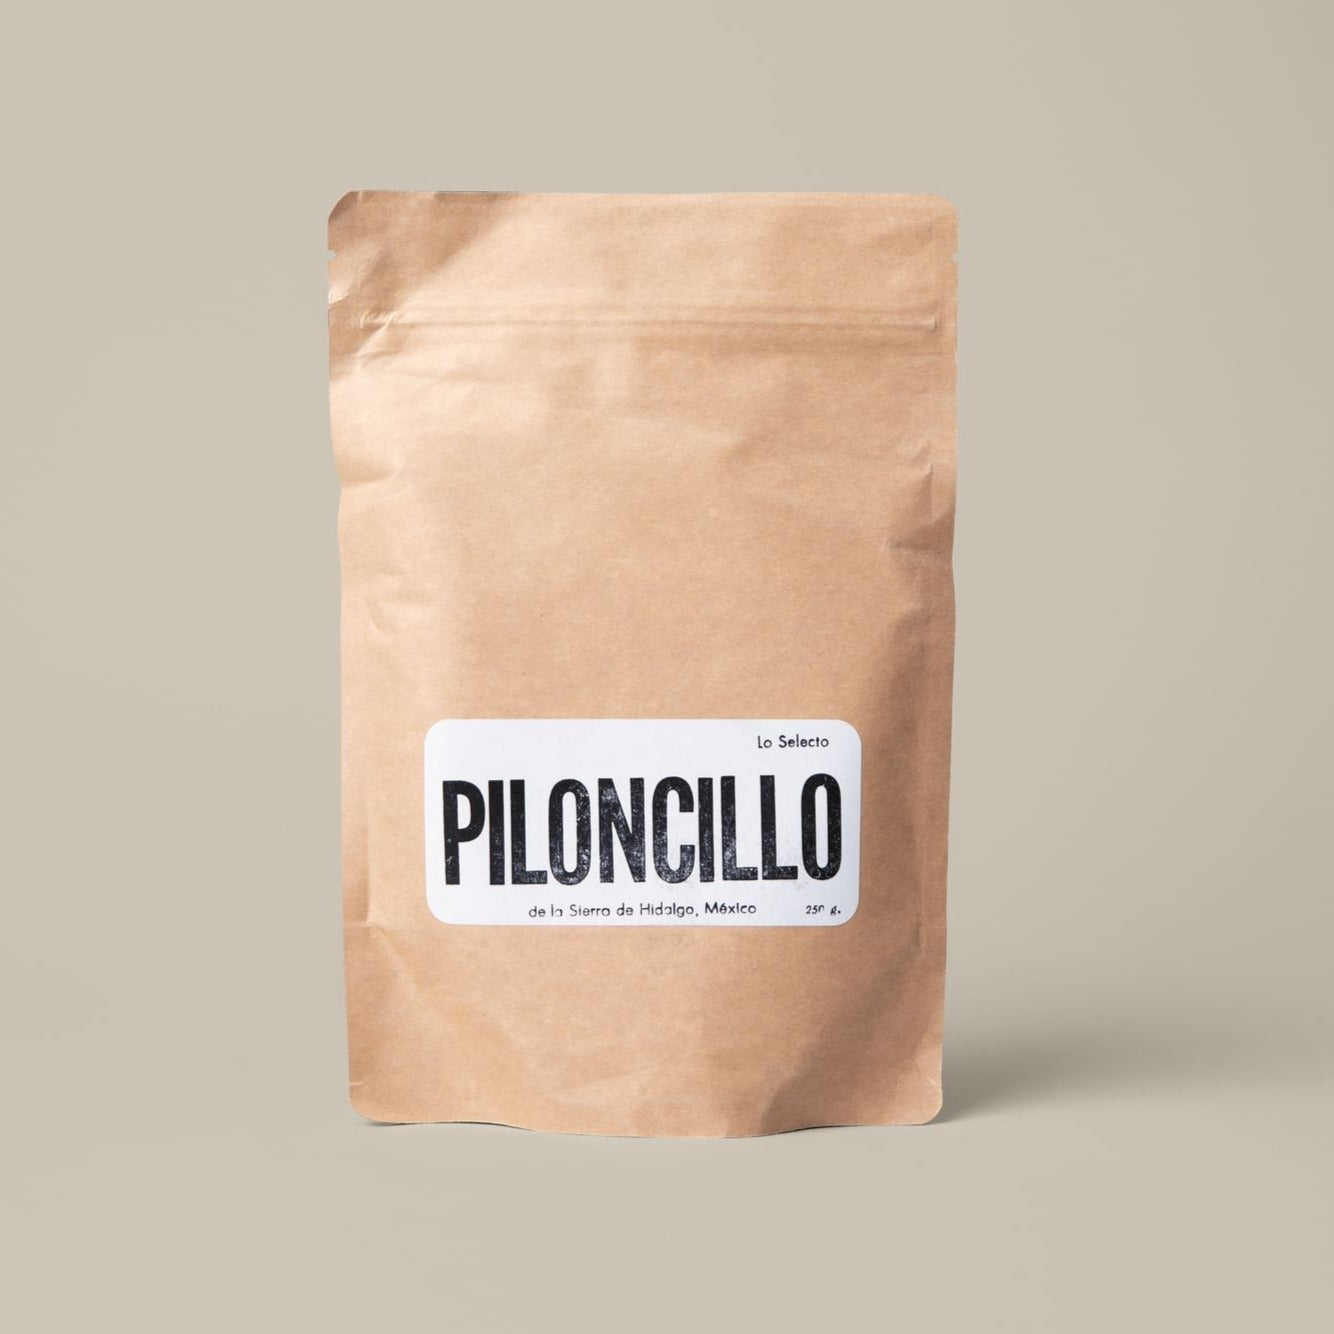 Bag of piloncillo made by Lo Selecto.